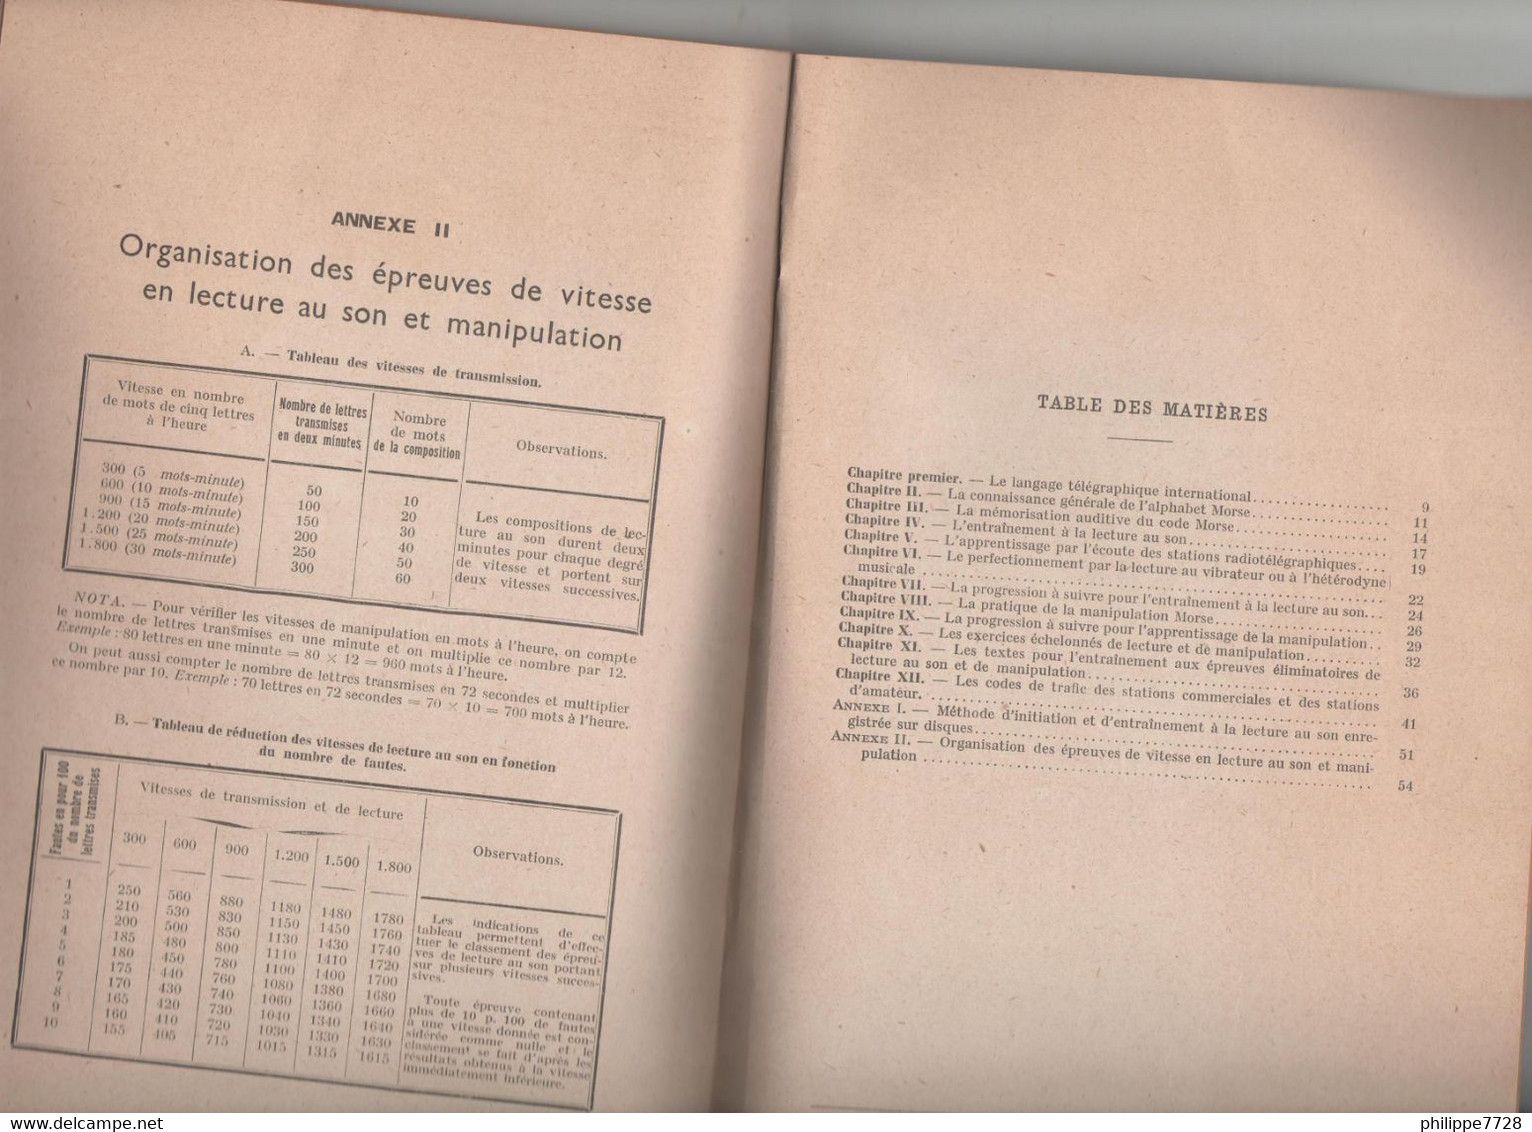 La Lecture Au Son Des Signaux Morse 1947 - Literatuur & Schema's